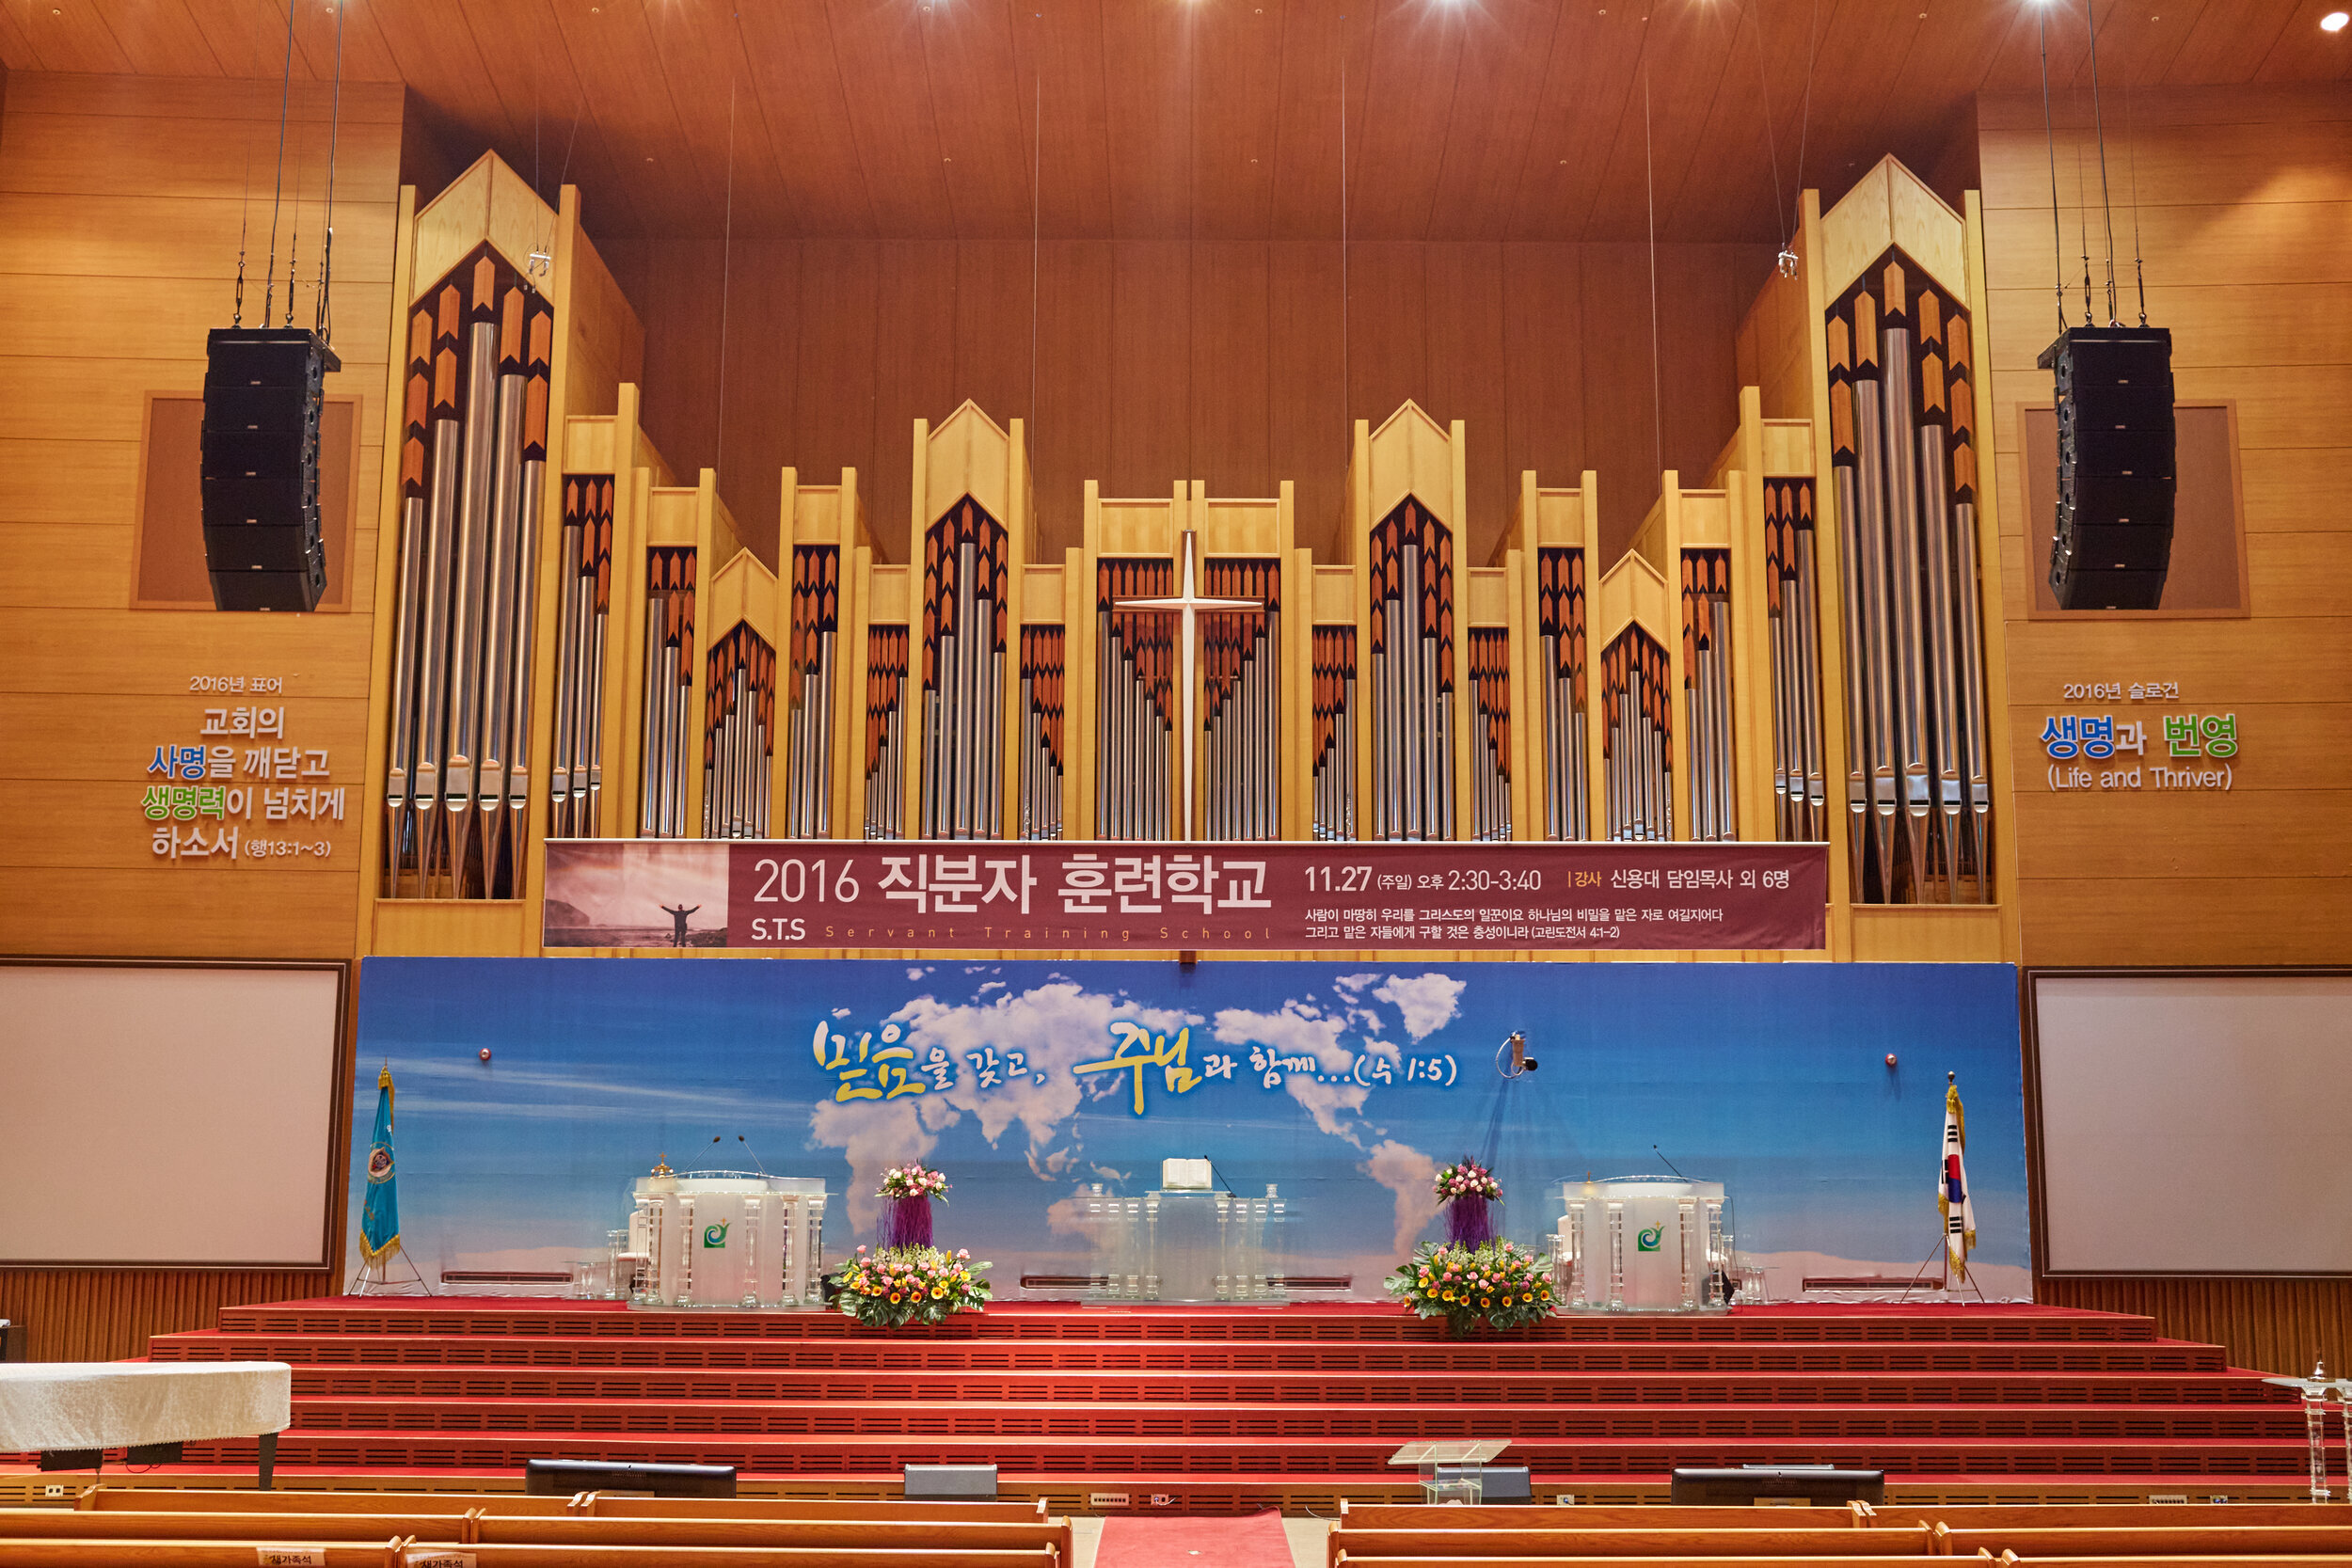 The Heavenly Dream Methodist Church